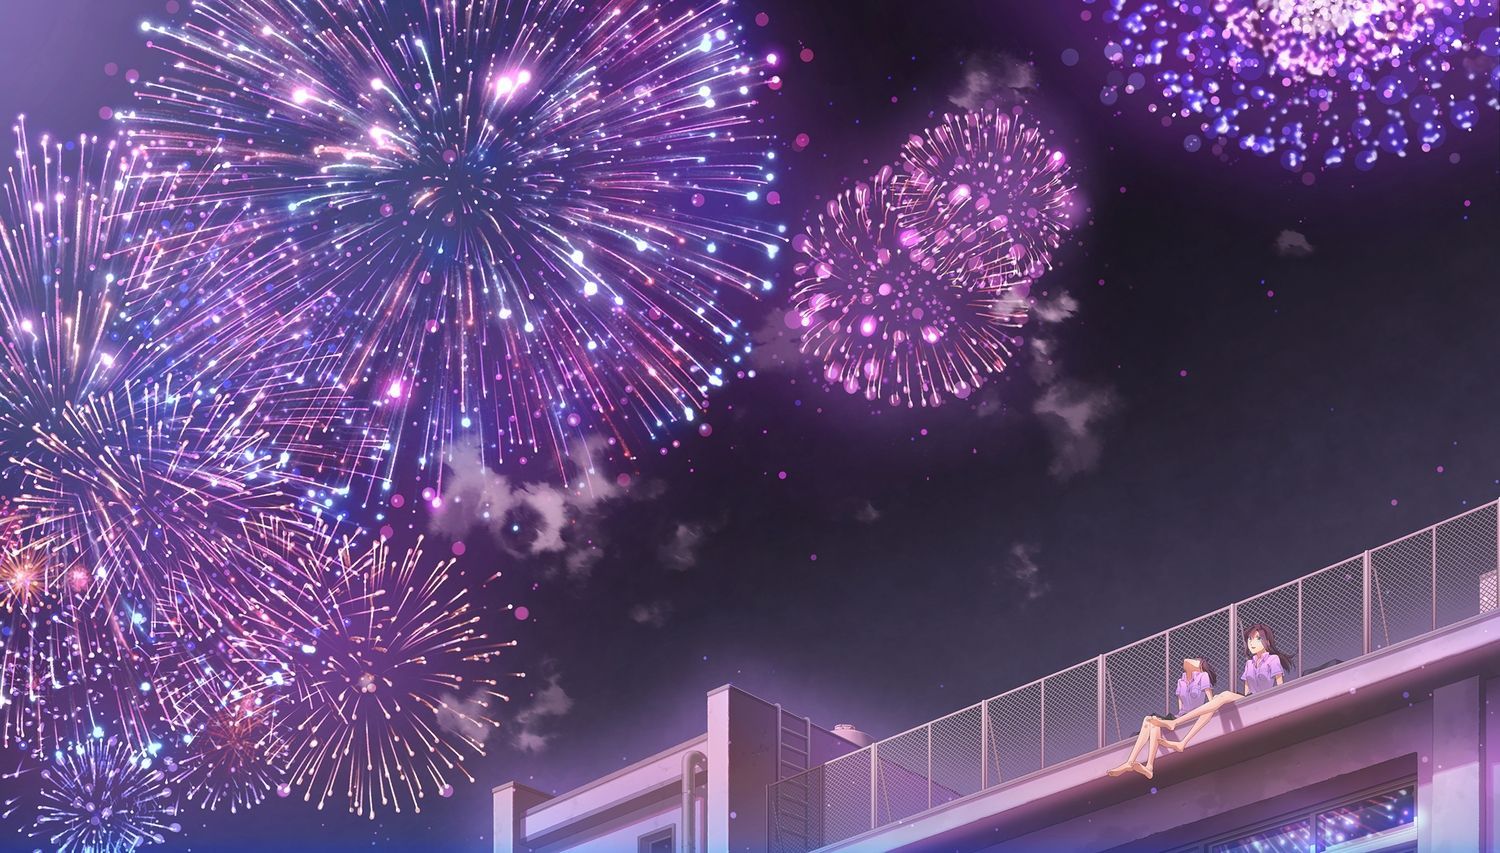 Fireworks Anime Wallpaper Free .wallpaperaccess.com